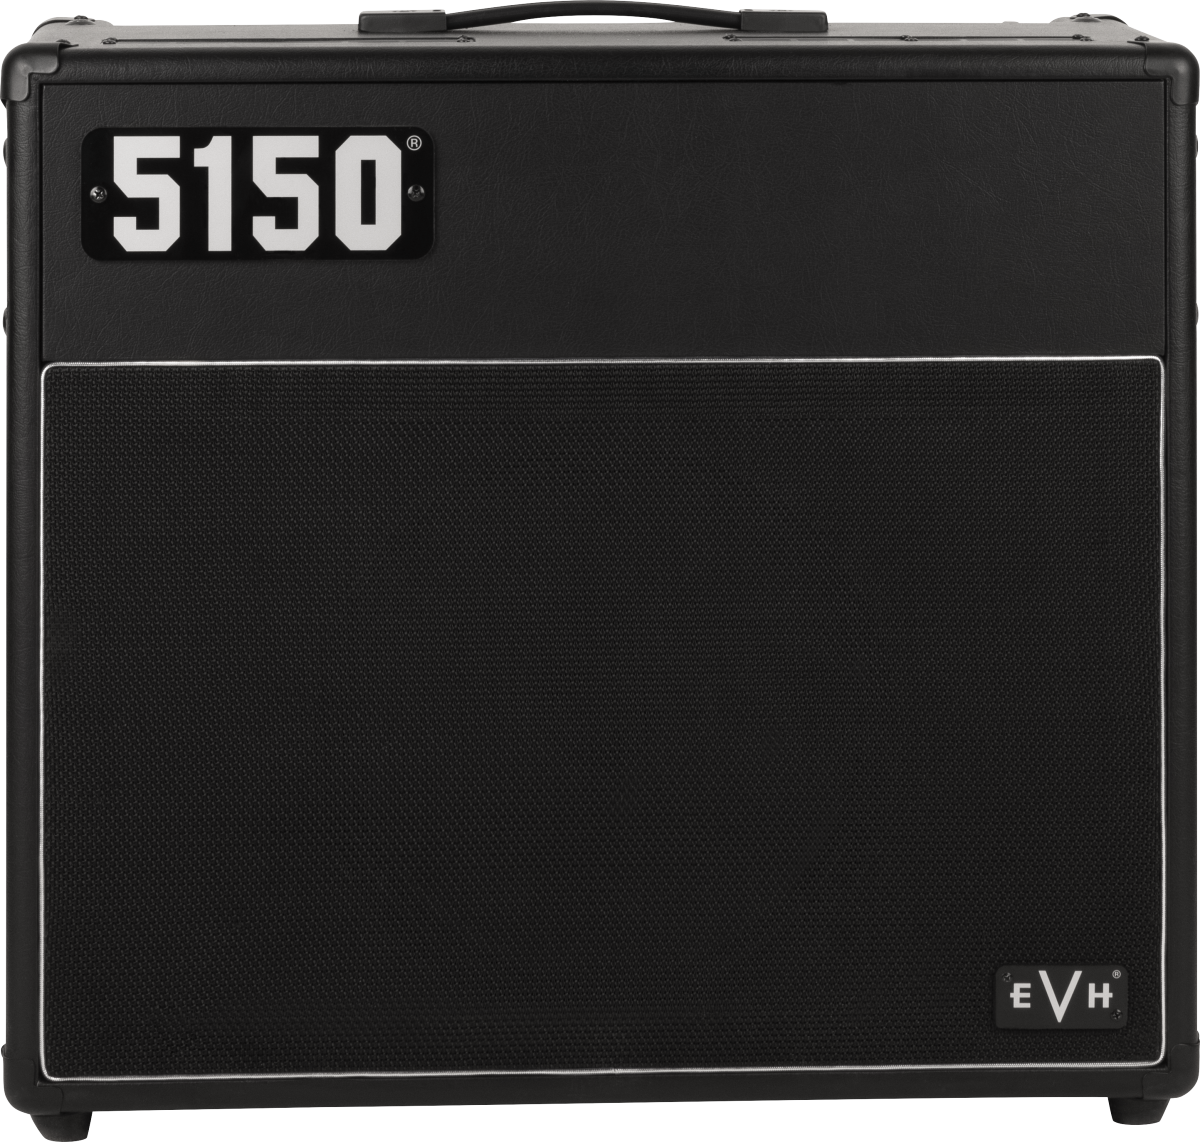 EVH 5150 Iconic Series 40W 1x12 Combo, Black : photo 1